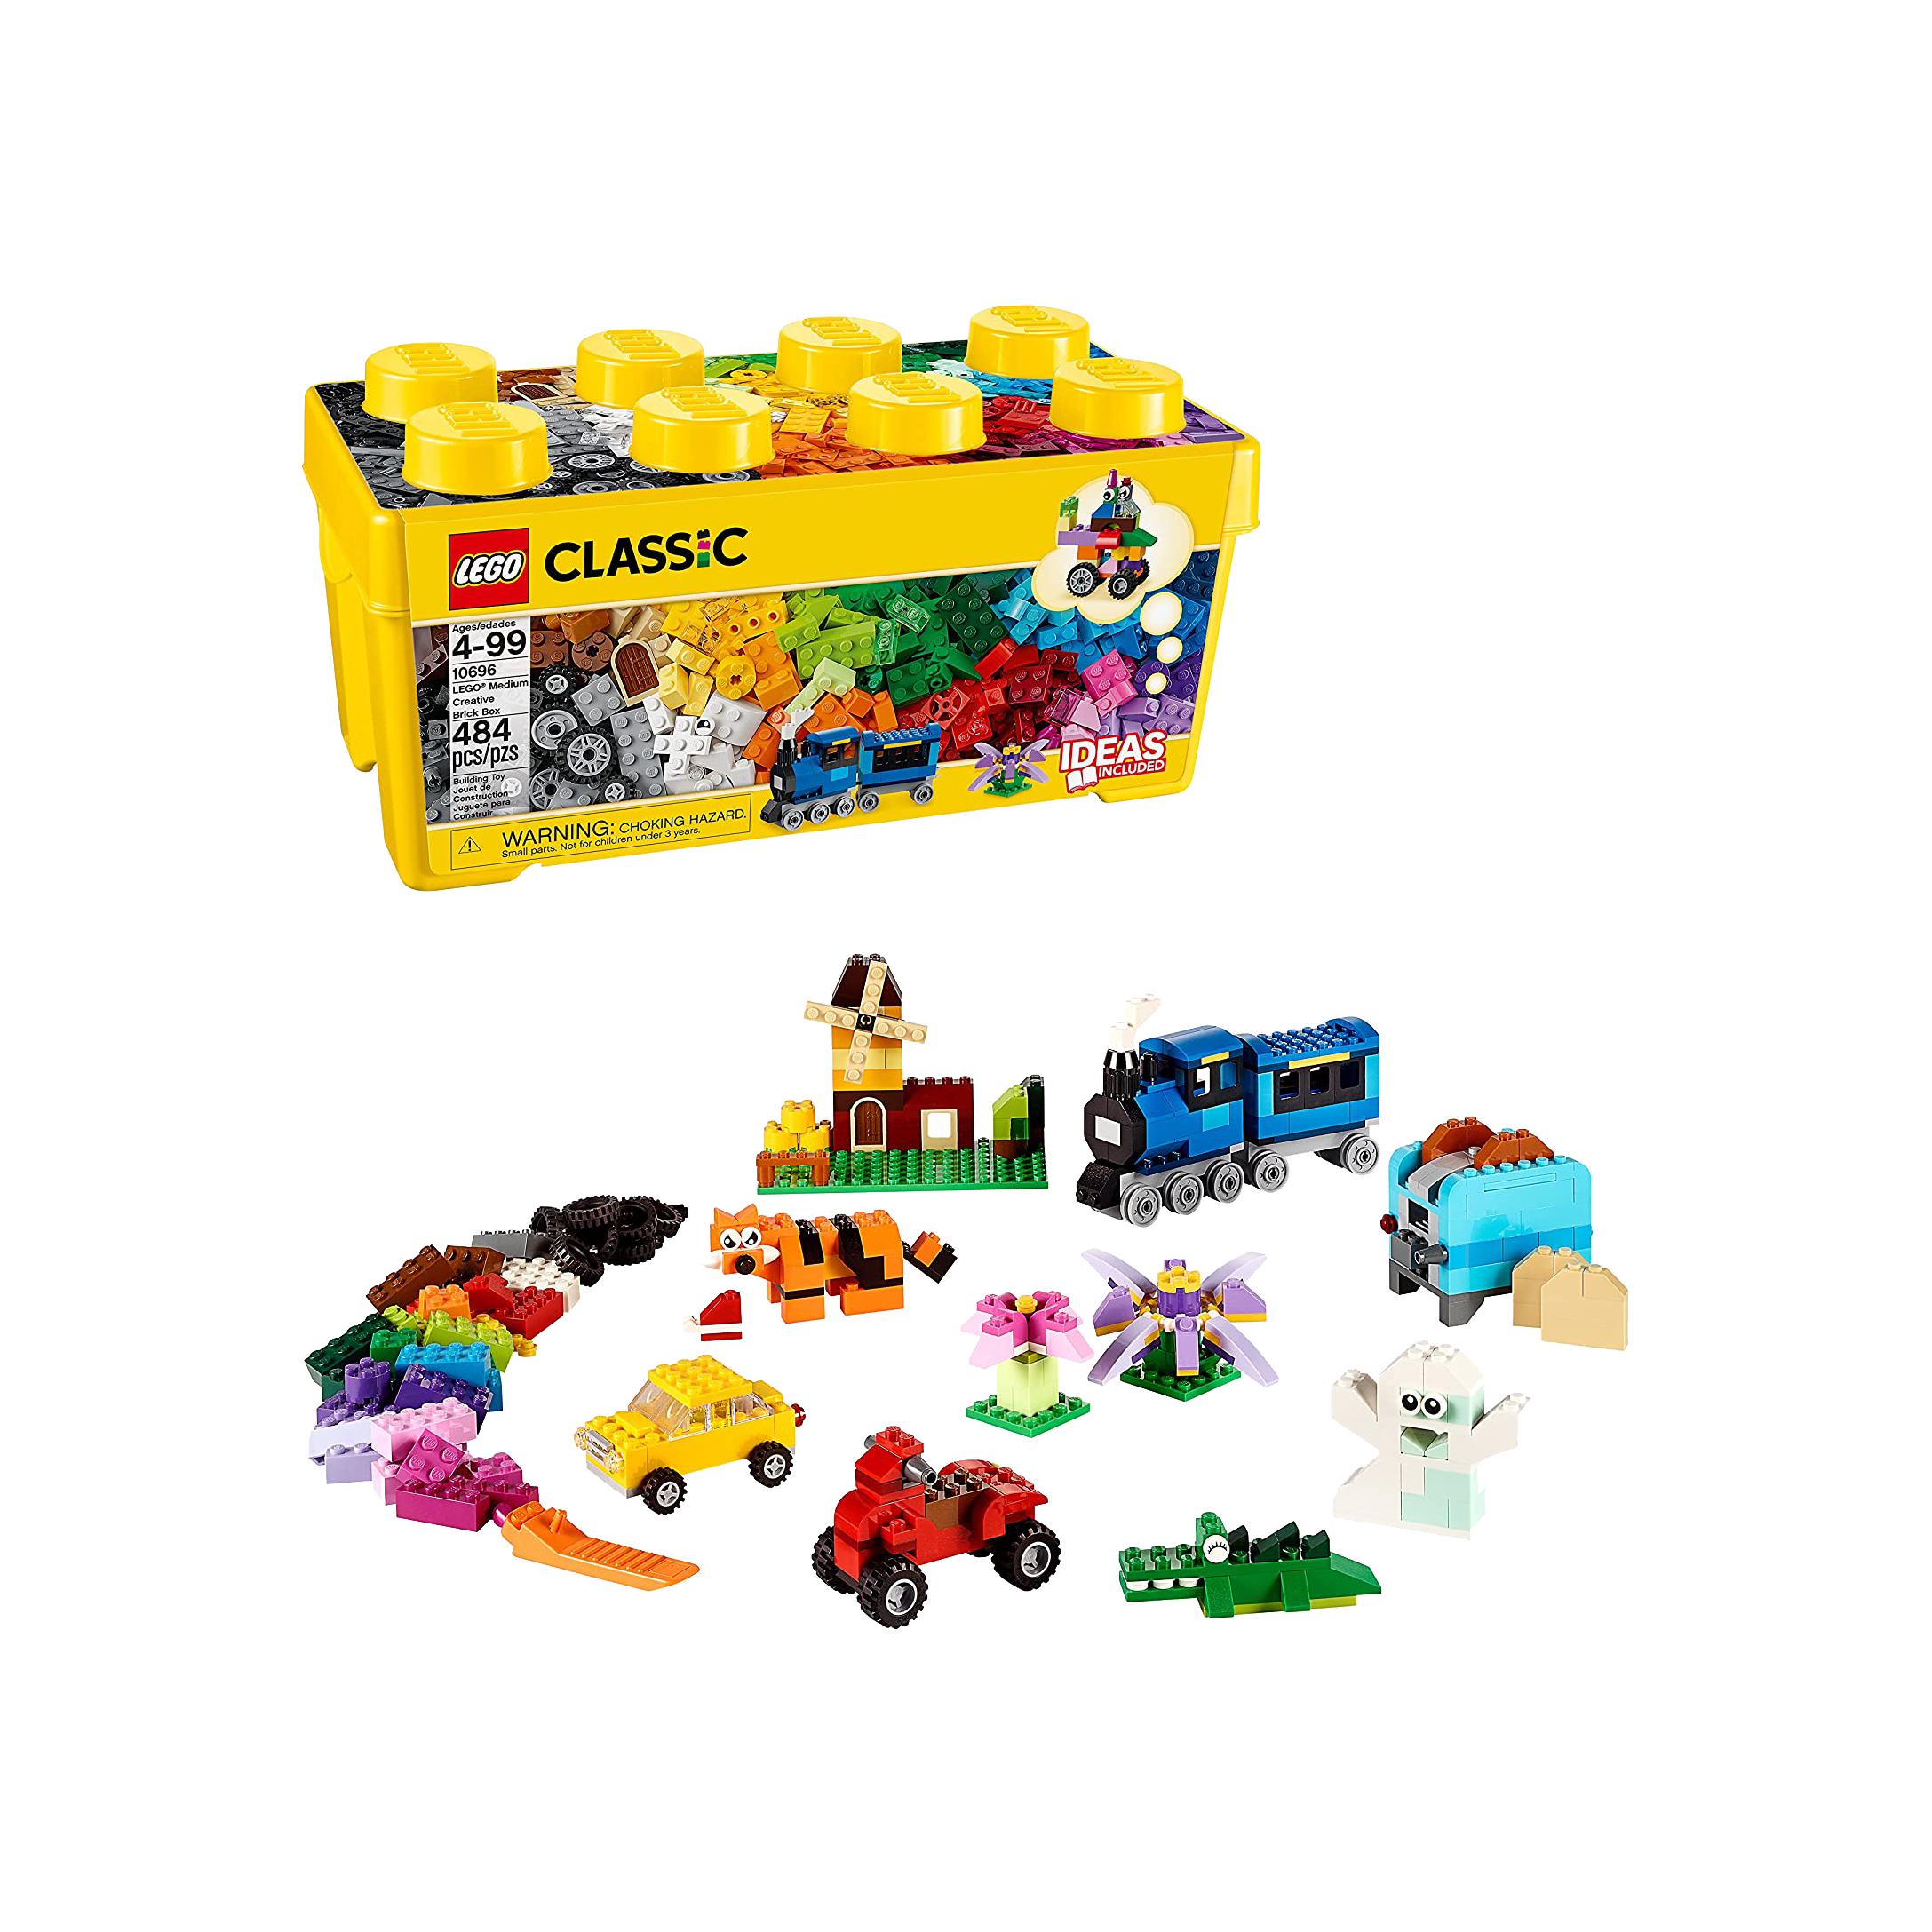 LEGO Creative Brick Box (484 Pieces), Ages 4+: Gift Idea For